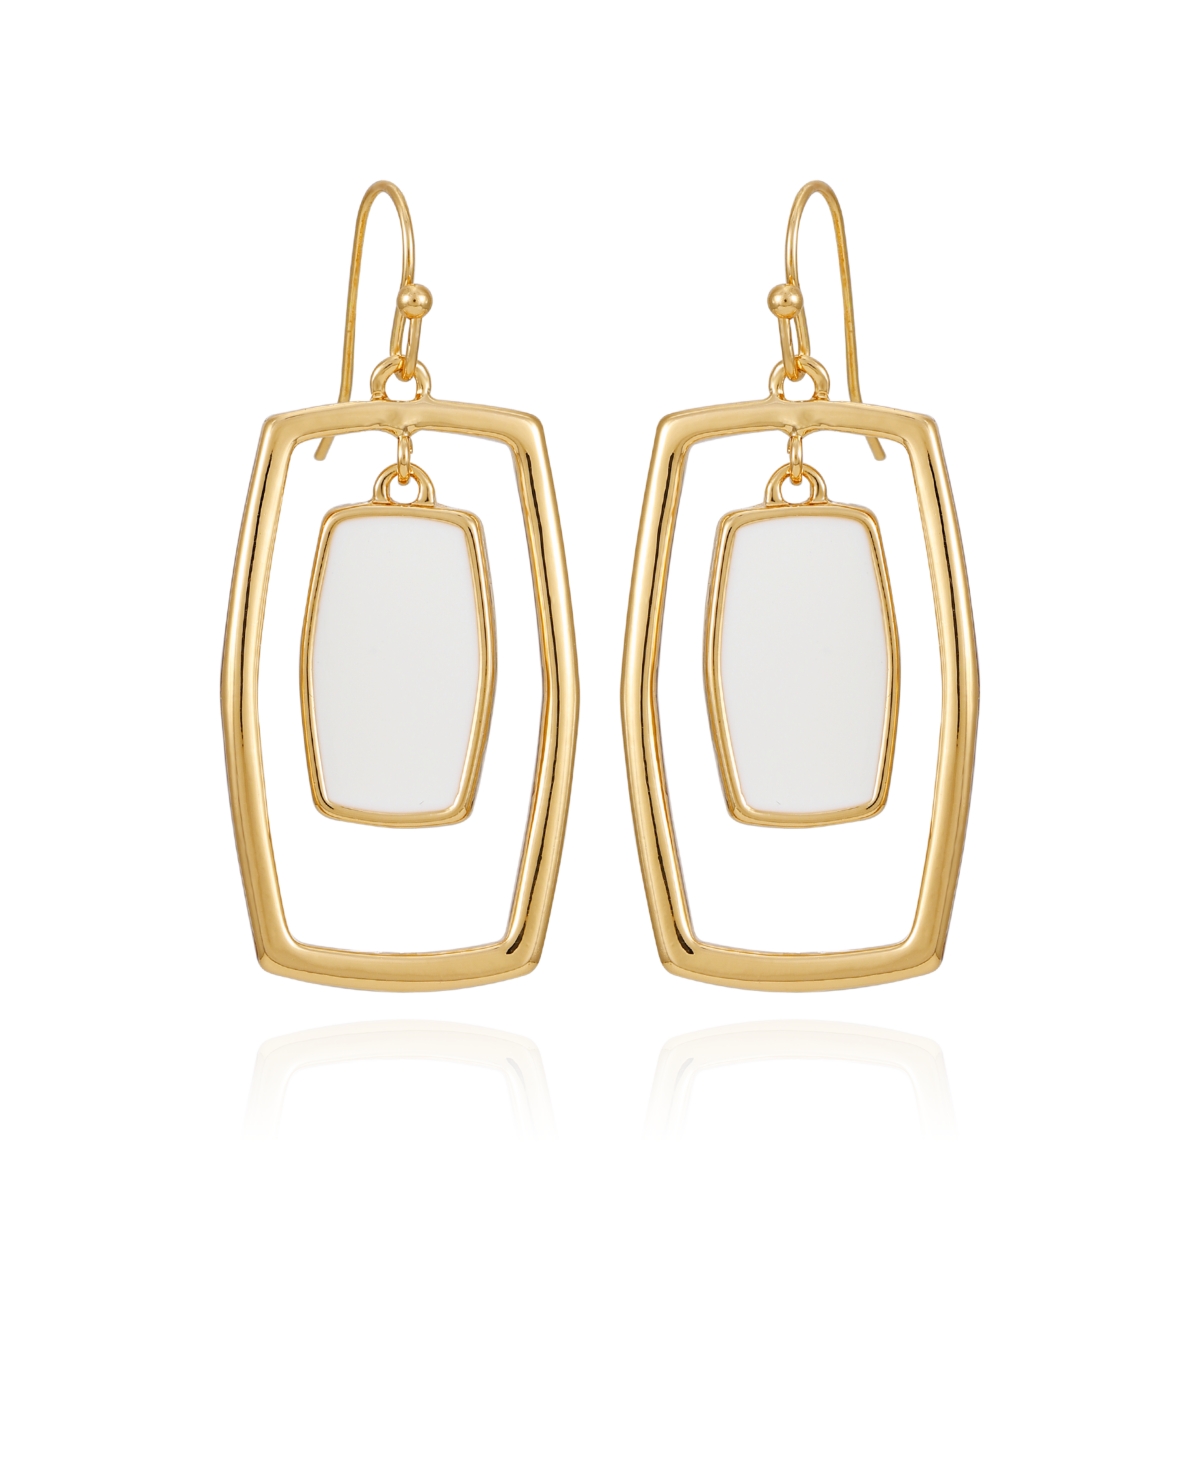 Gold-Tone White Acrylic Rectangular Hoop Earrings - Gold